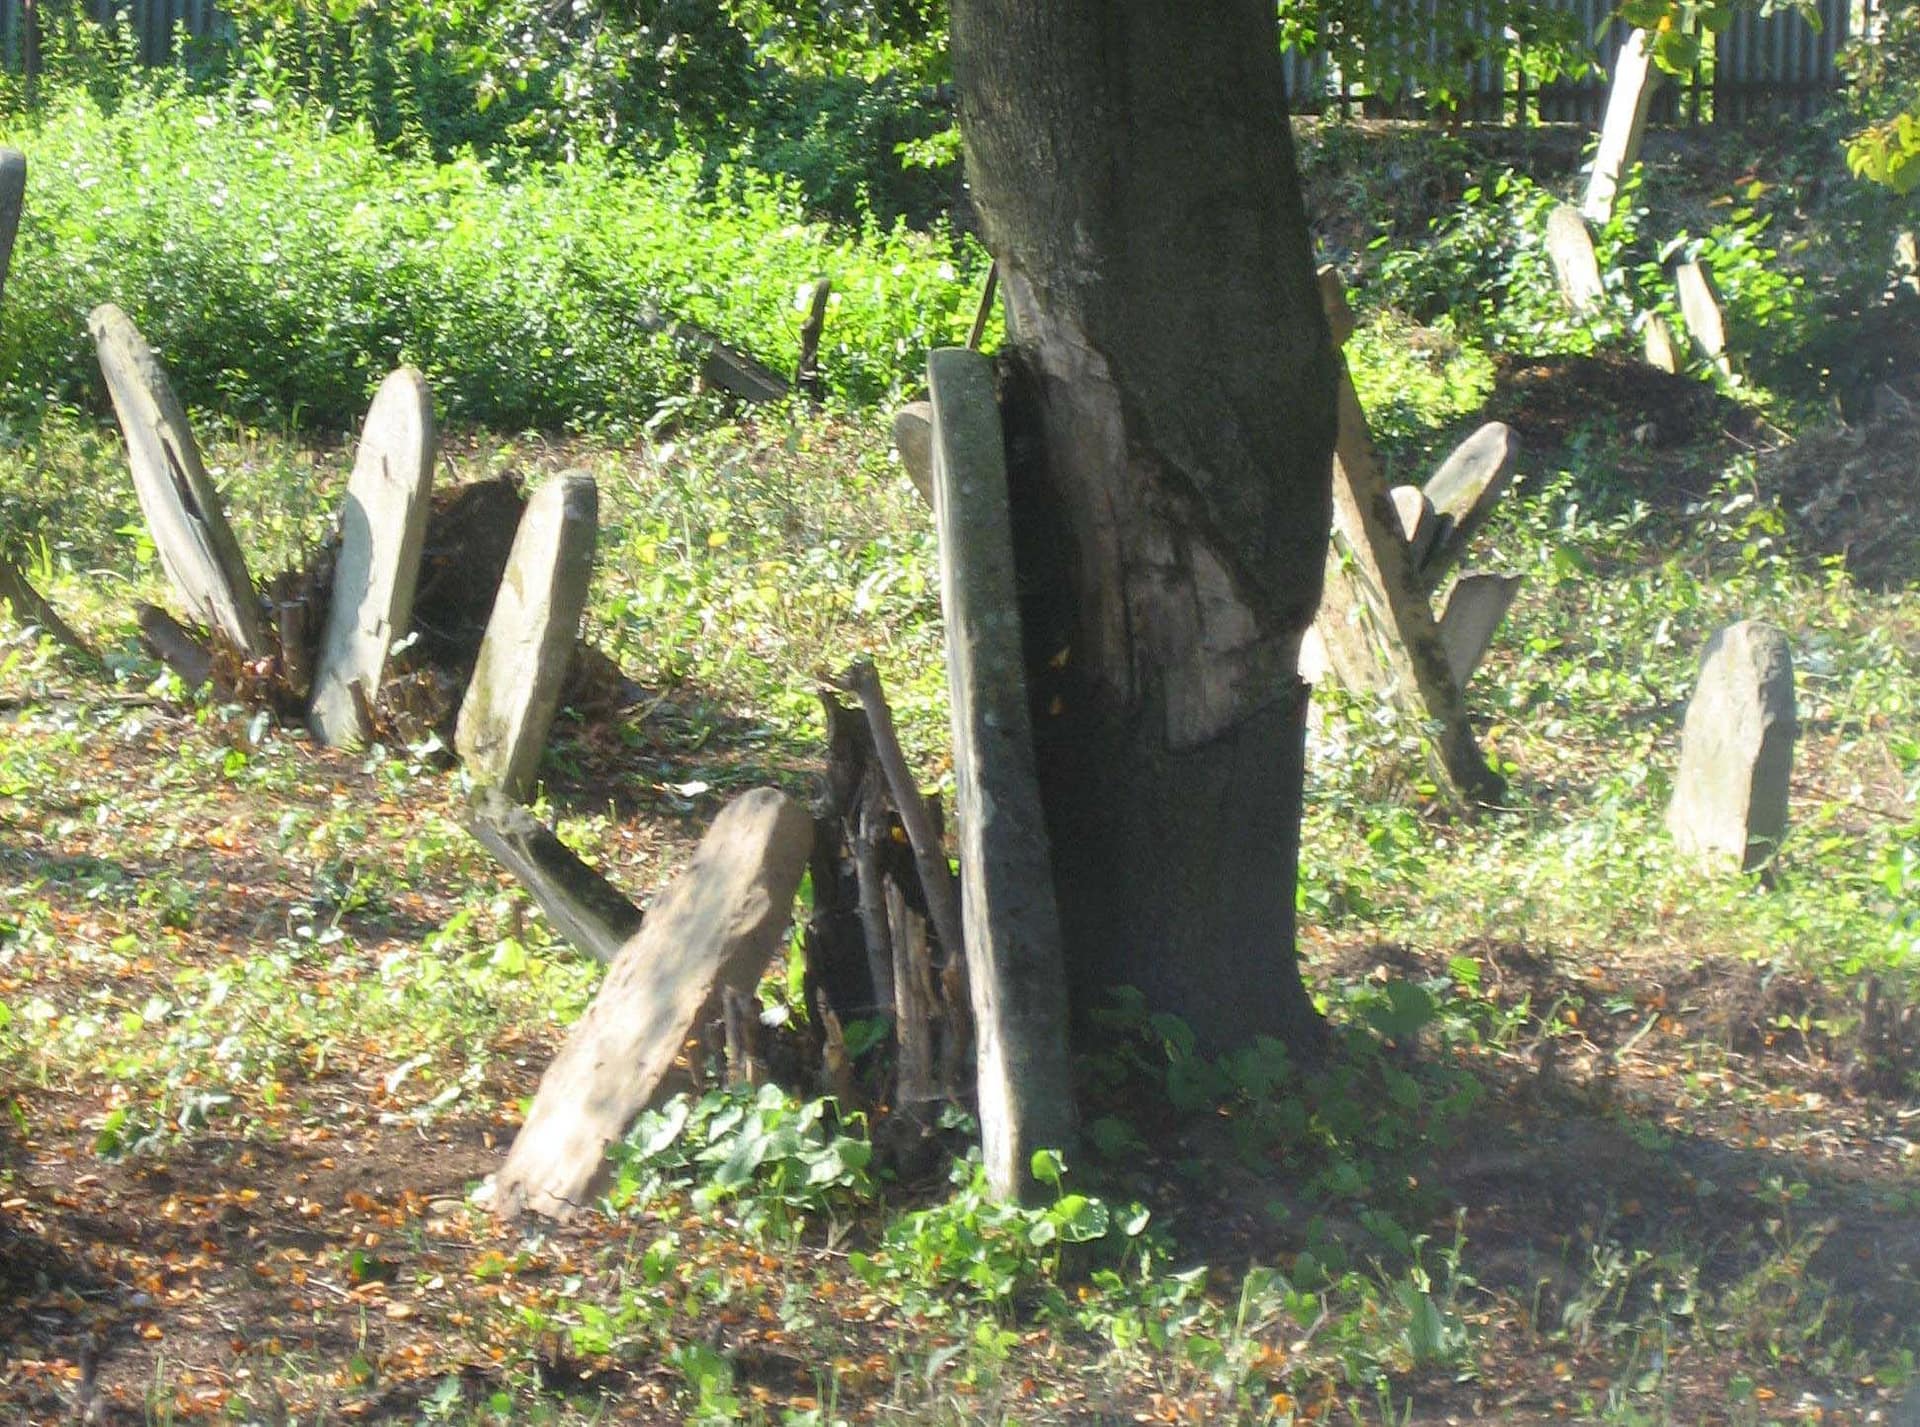 2005 - Bardejov's Jewish Cemetery before restoration